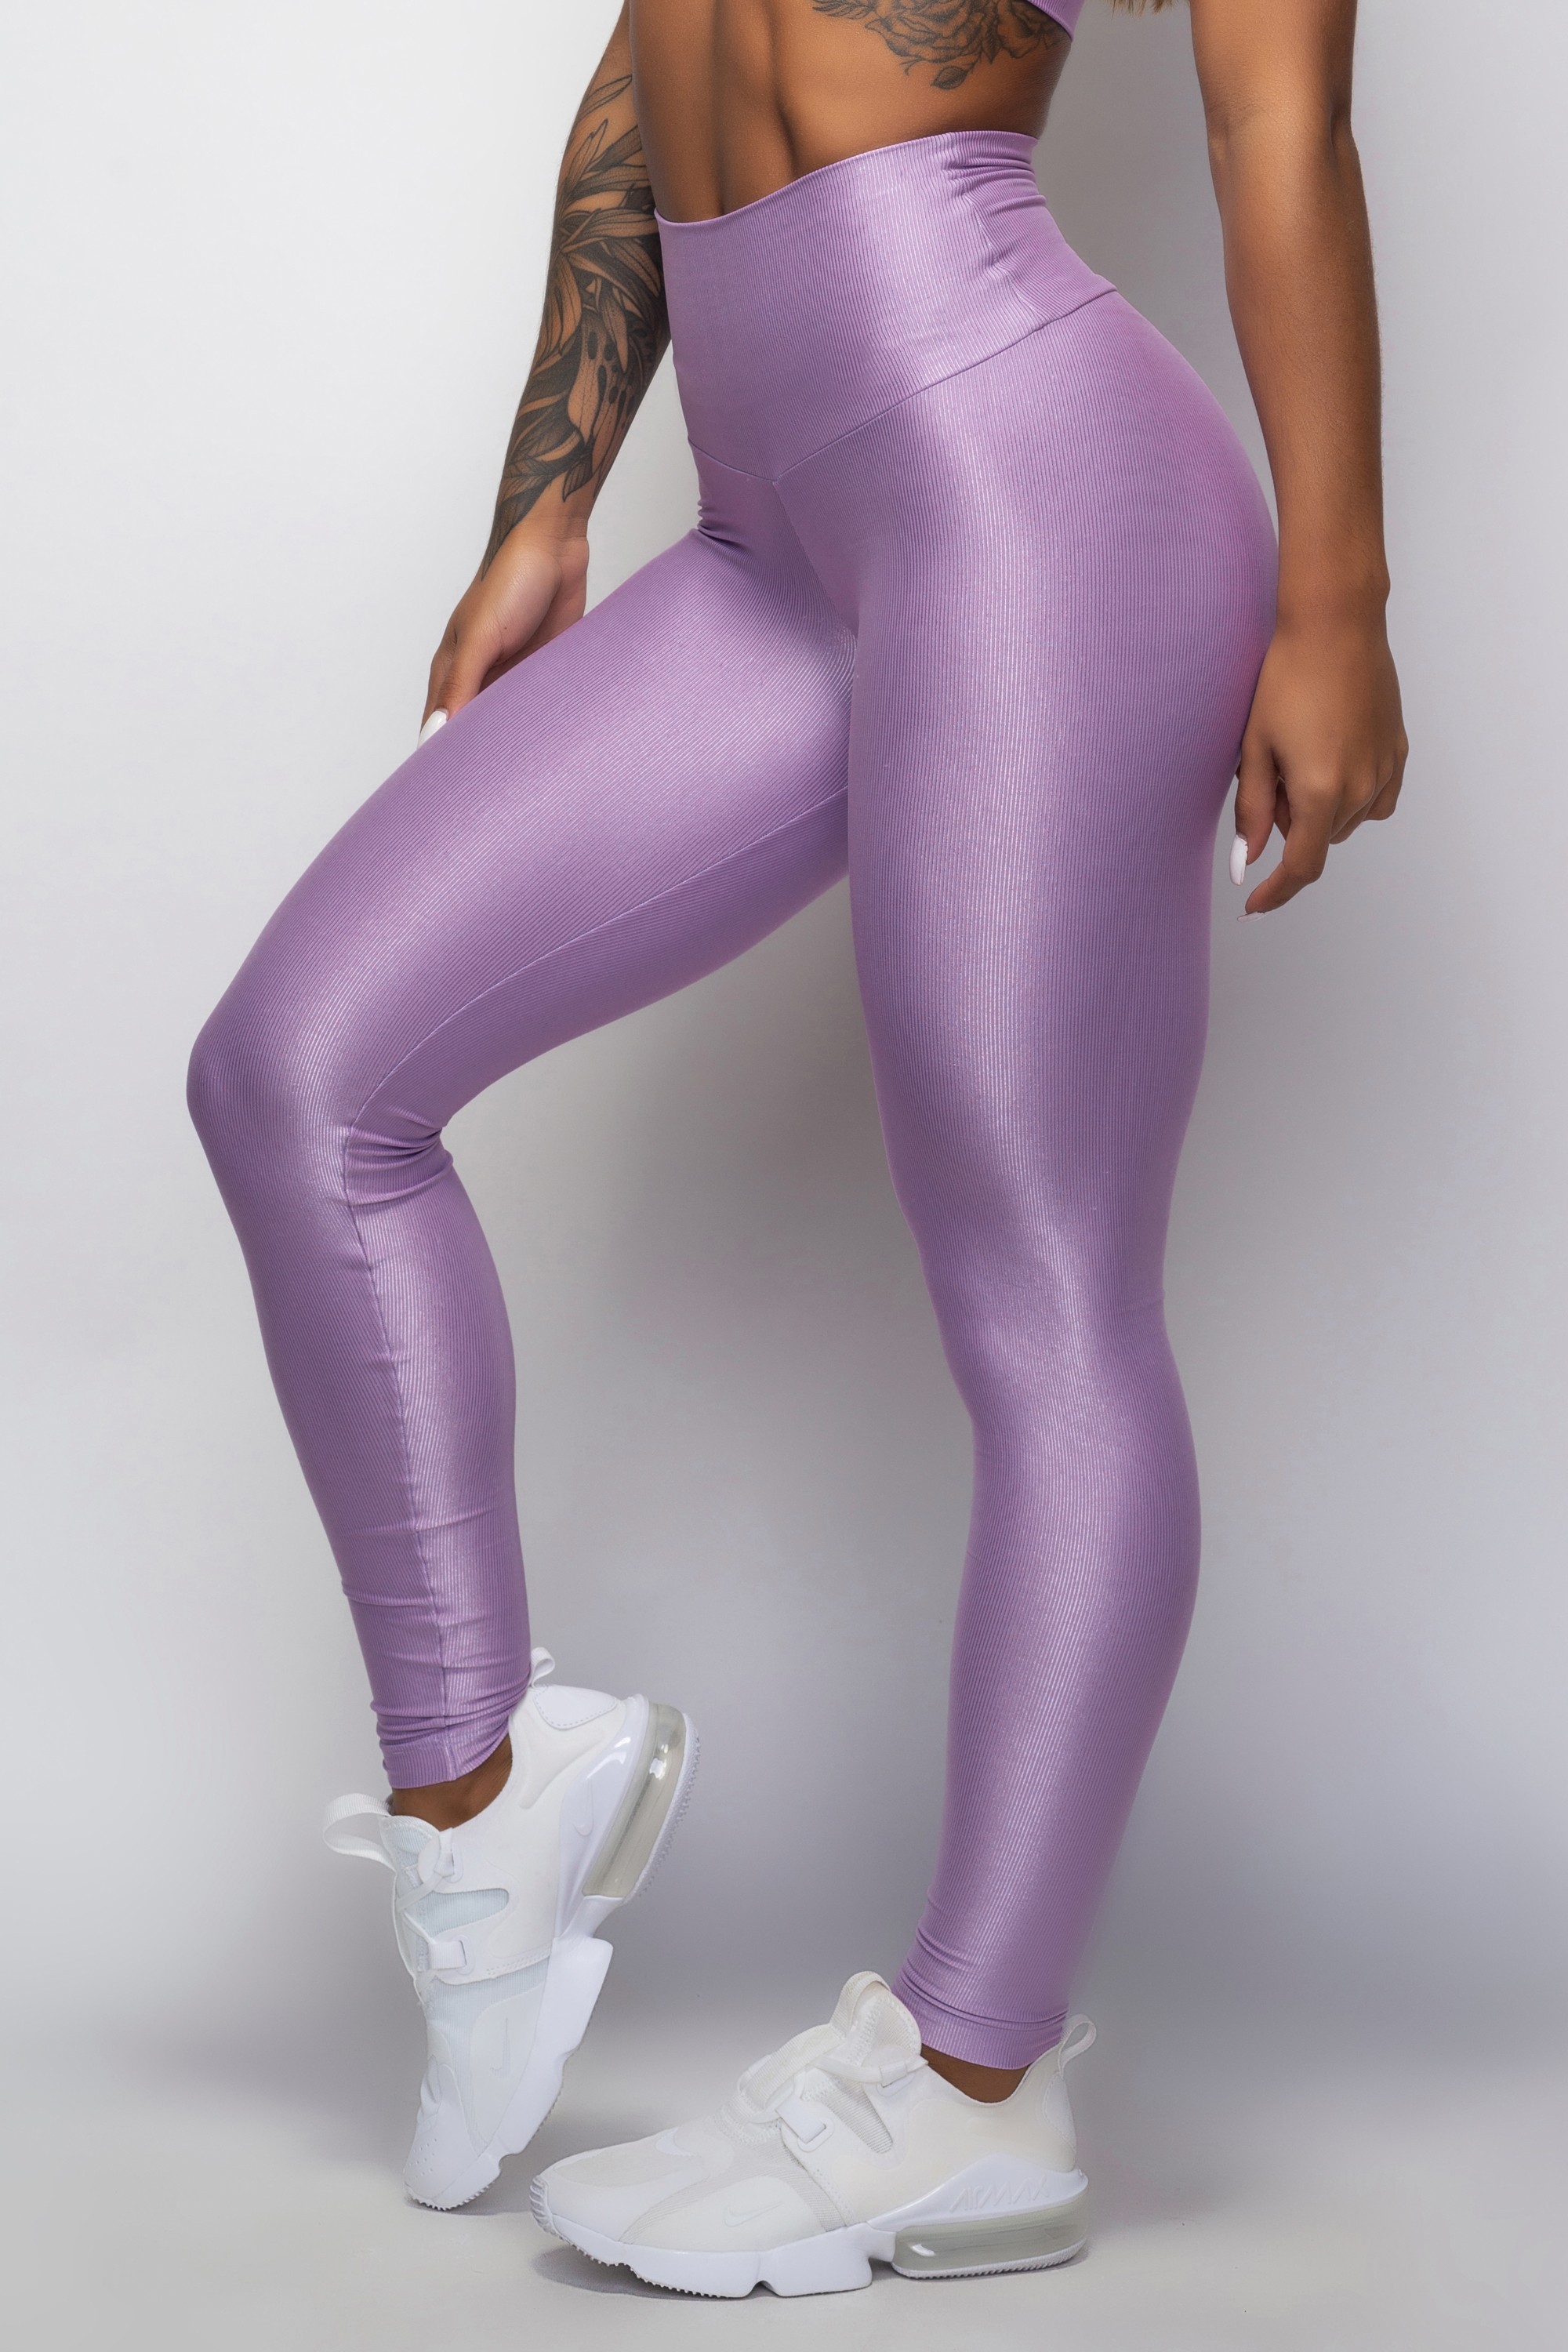 DPOIS Women's Shiny Metallic Workout Leggings High Waist Compression Yoga  Pants Tights Activewear